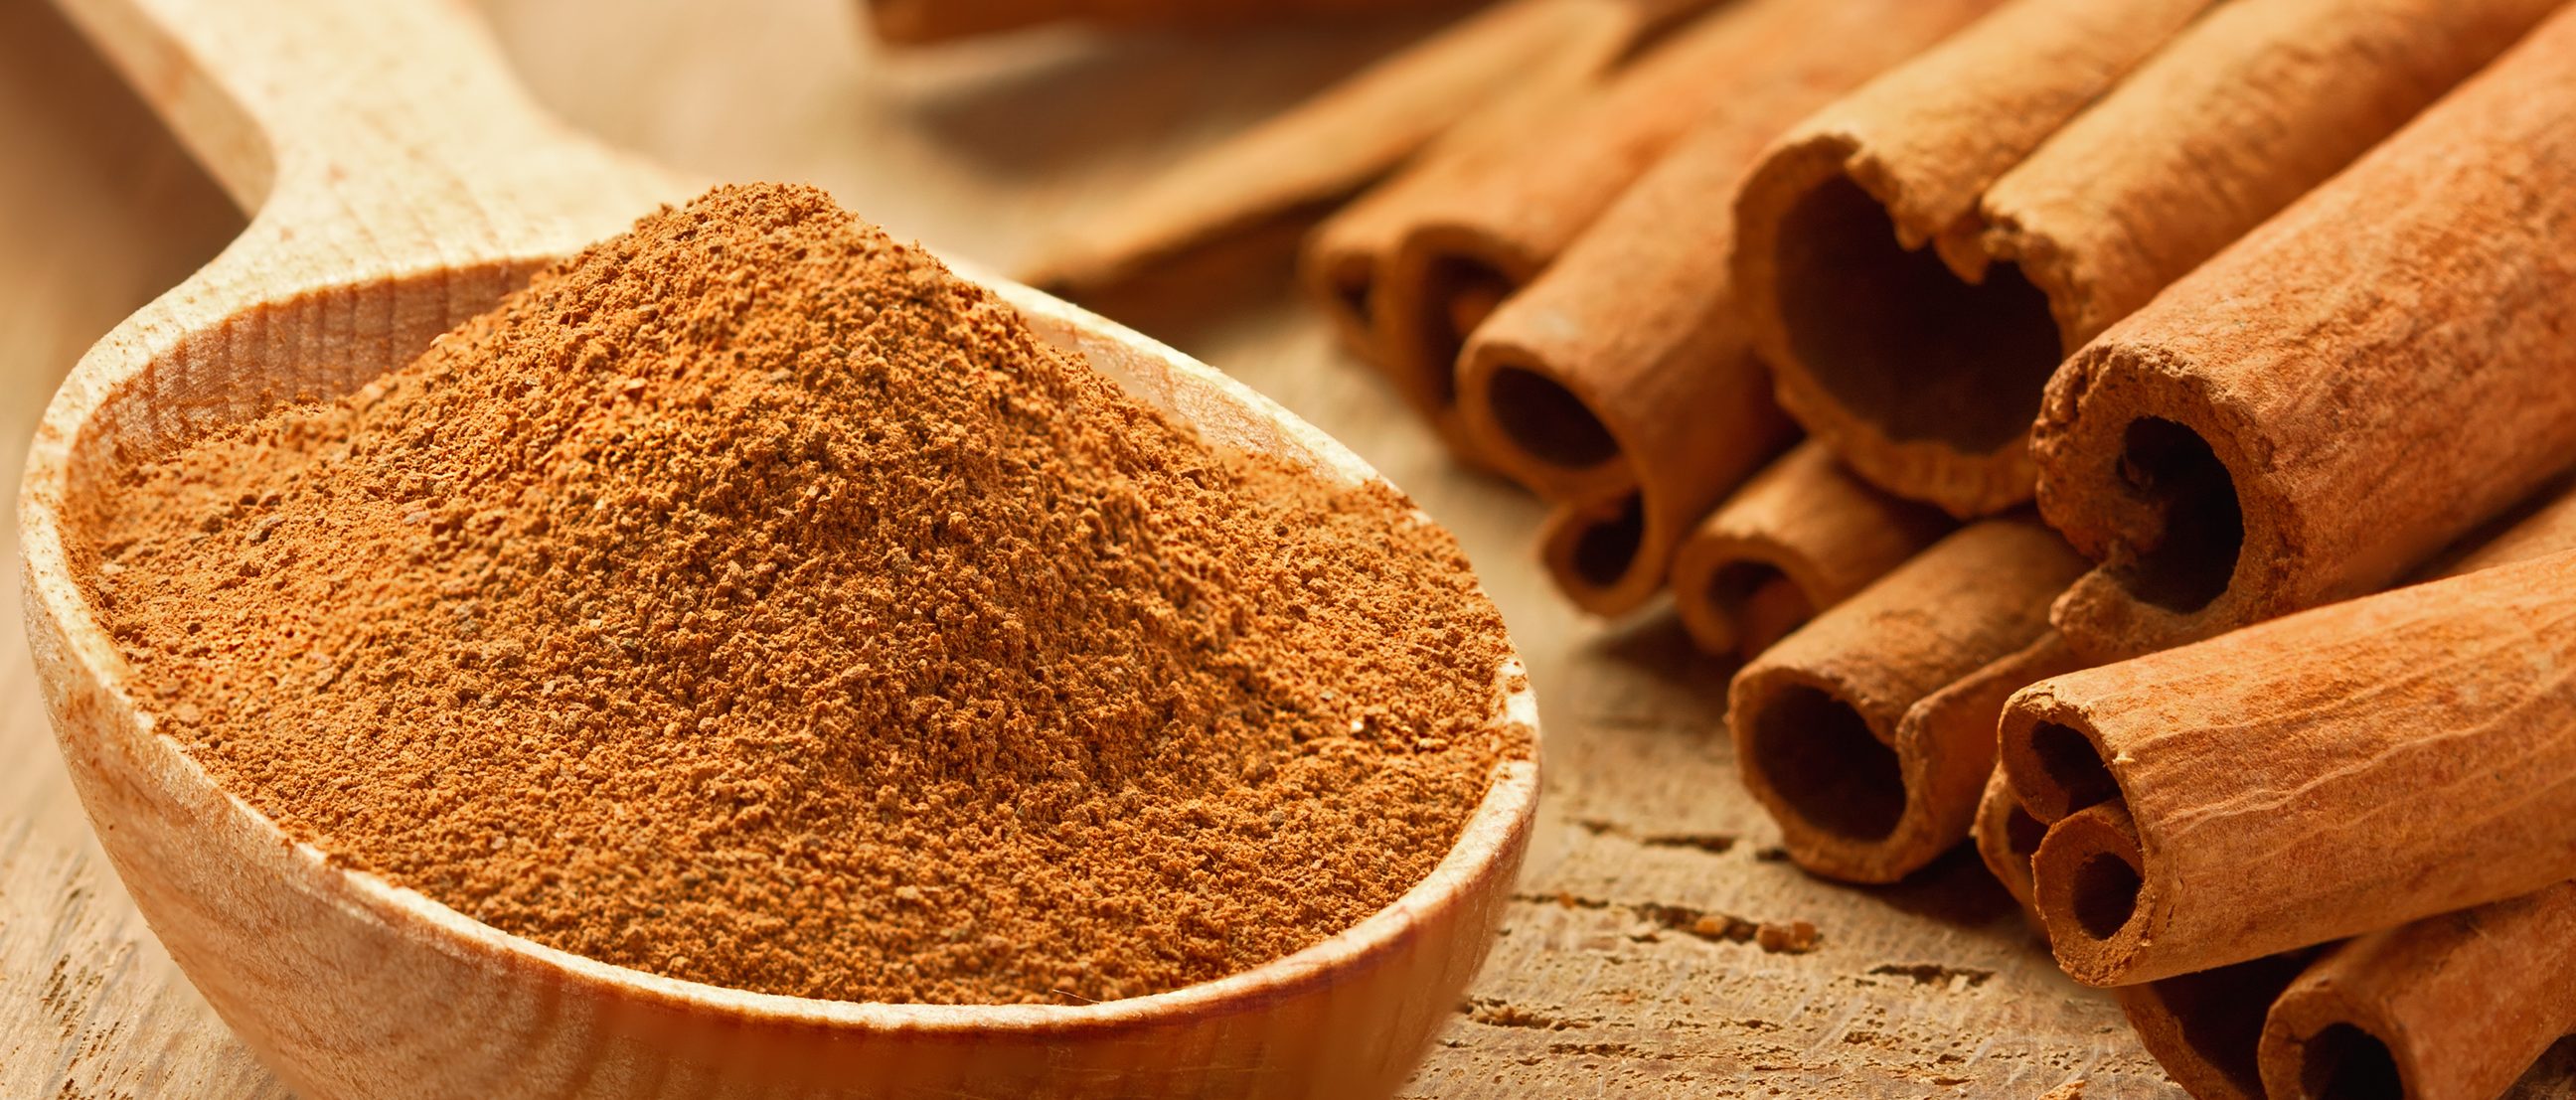 cinnamon-sticks-and-powder